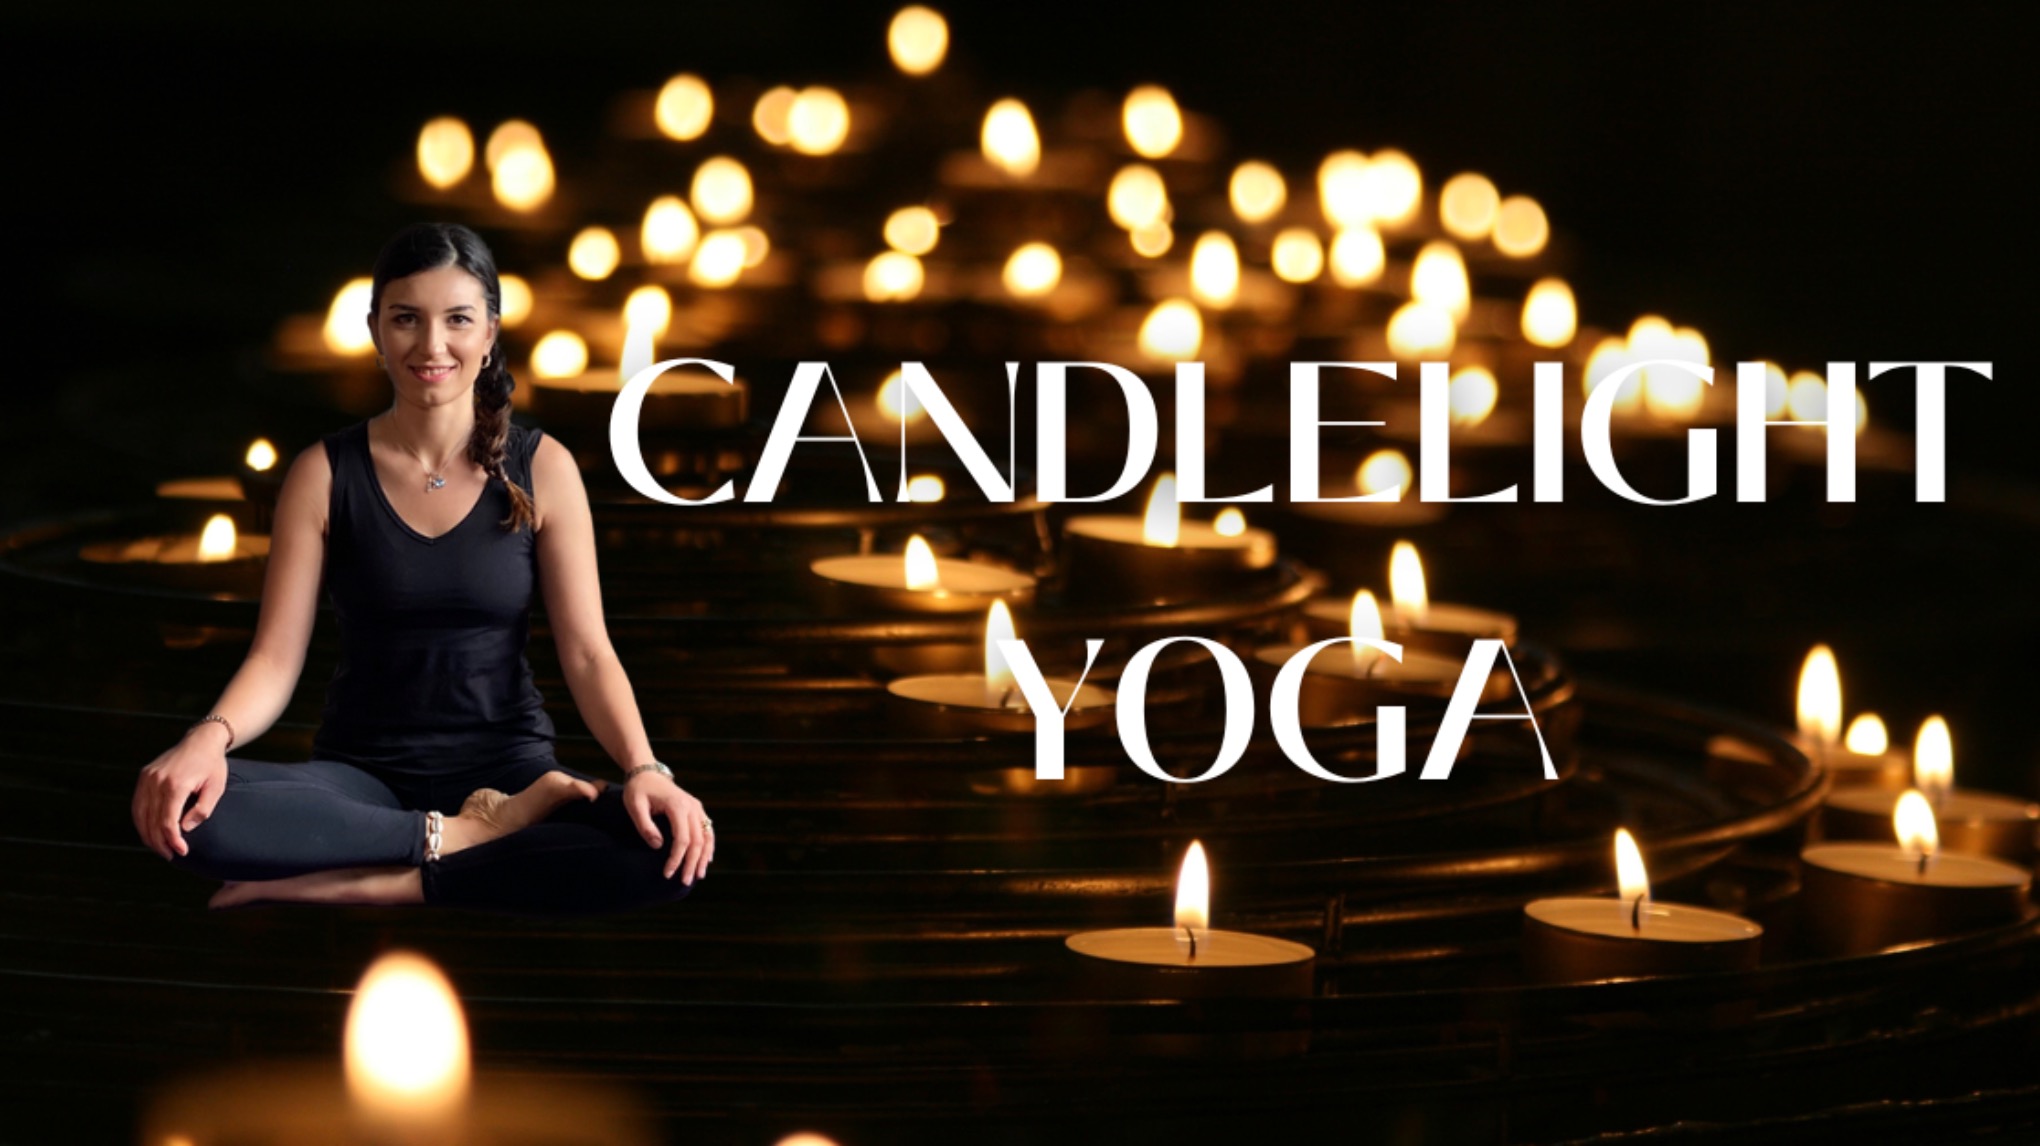 Candlelight Yoga with Aromatherapy, Sound Bath & Detox Dinner